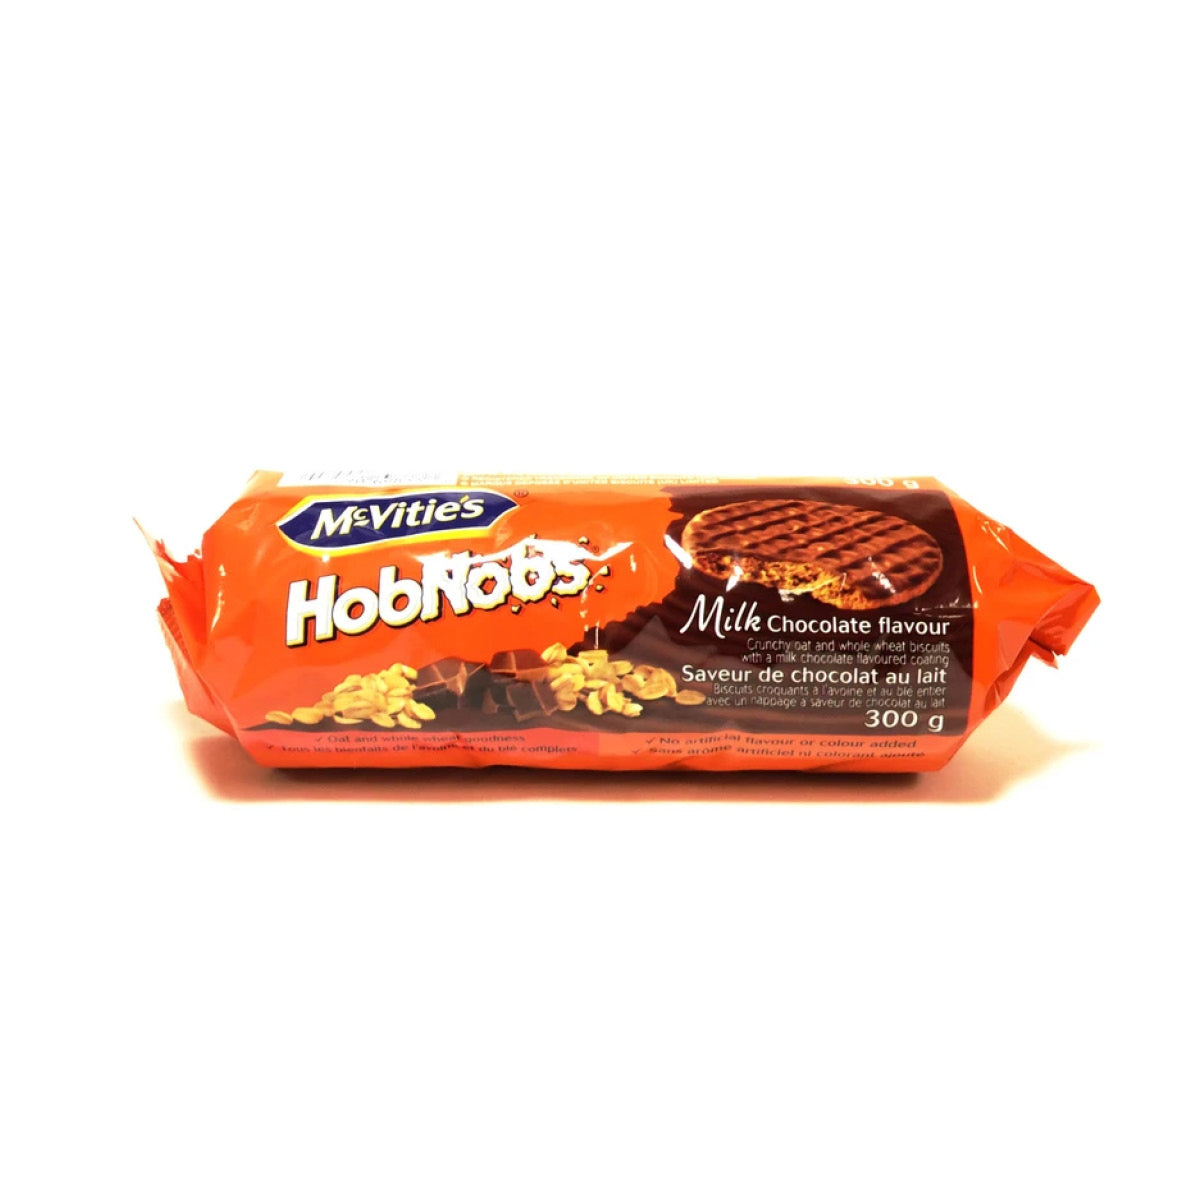 McVities Hob Nobs Milk Chocolate, 300g